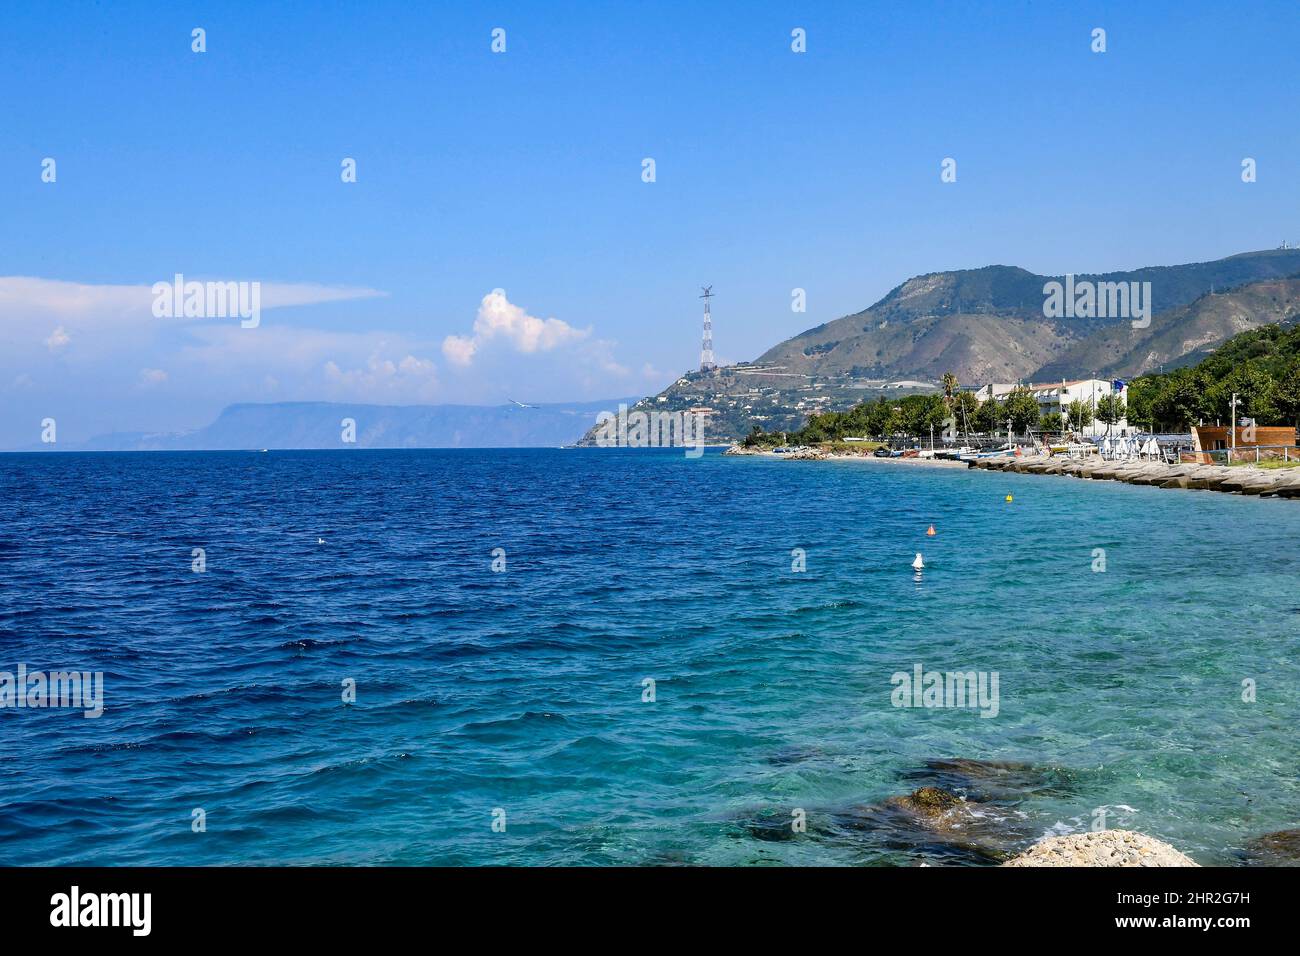 Italy, Calabria, Villa San Giovanni, strait of Messina view Stock Photo